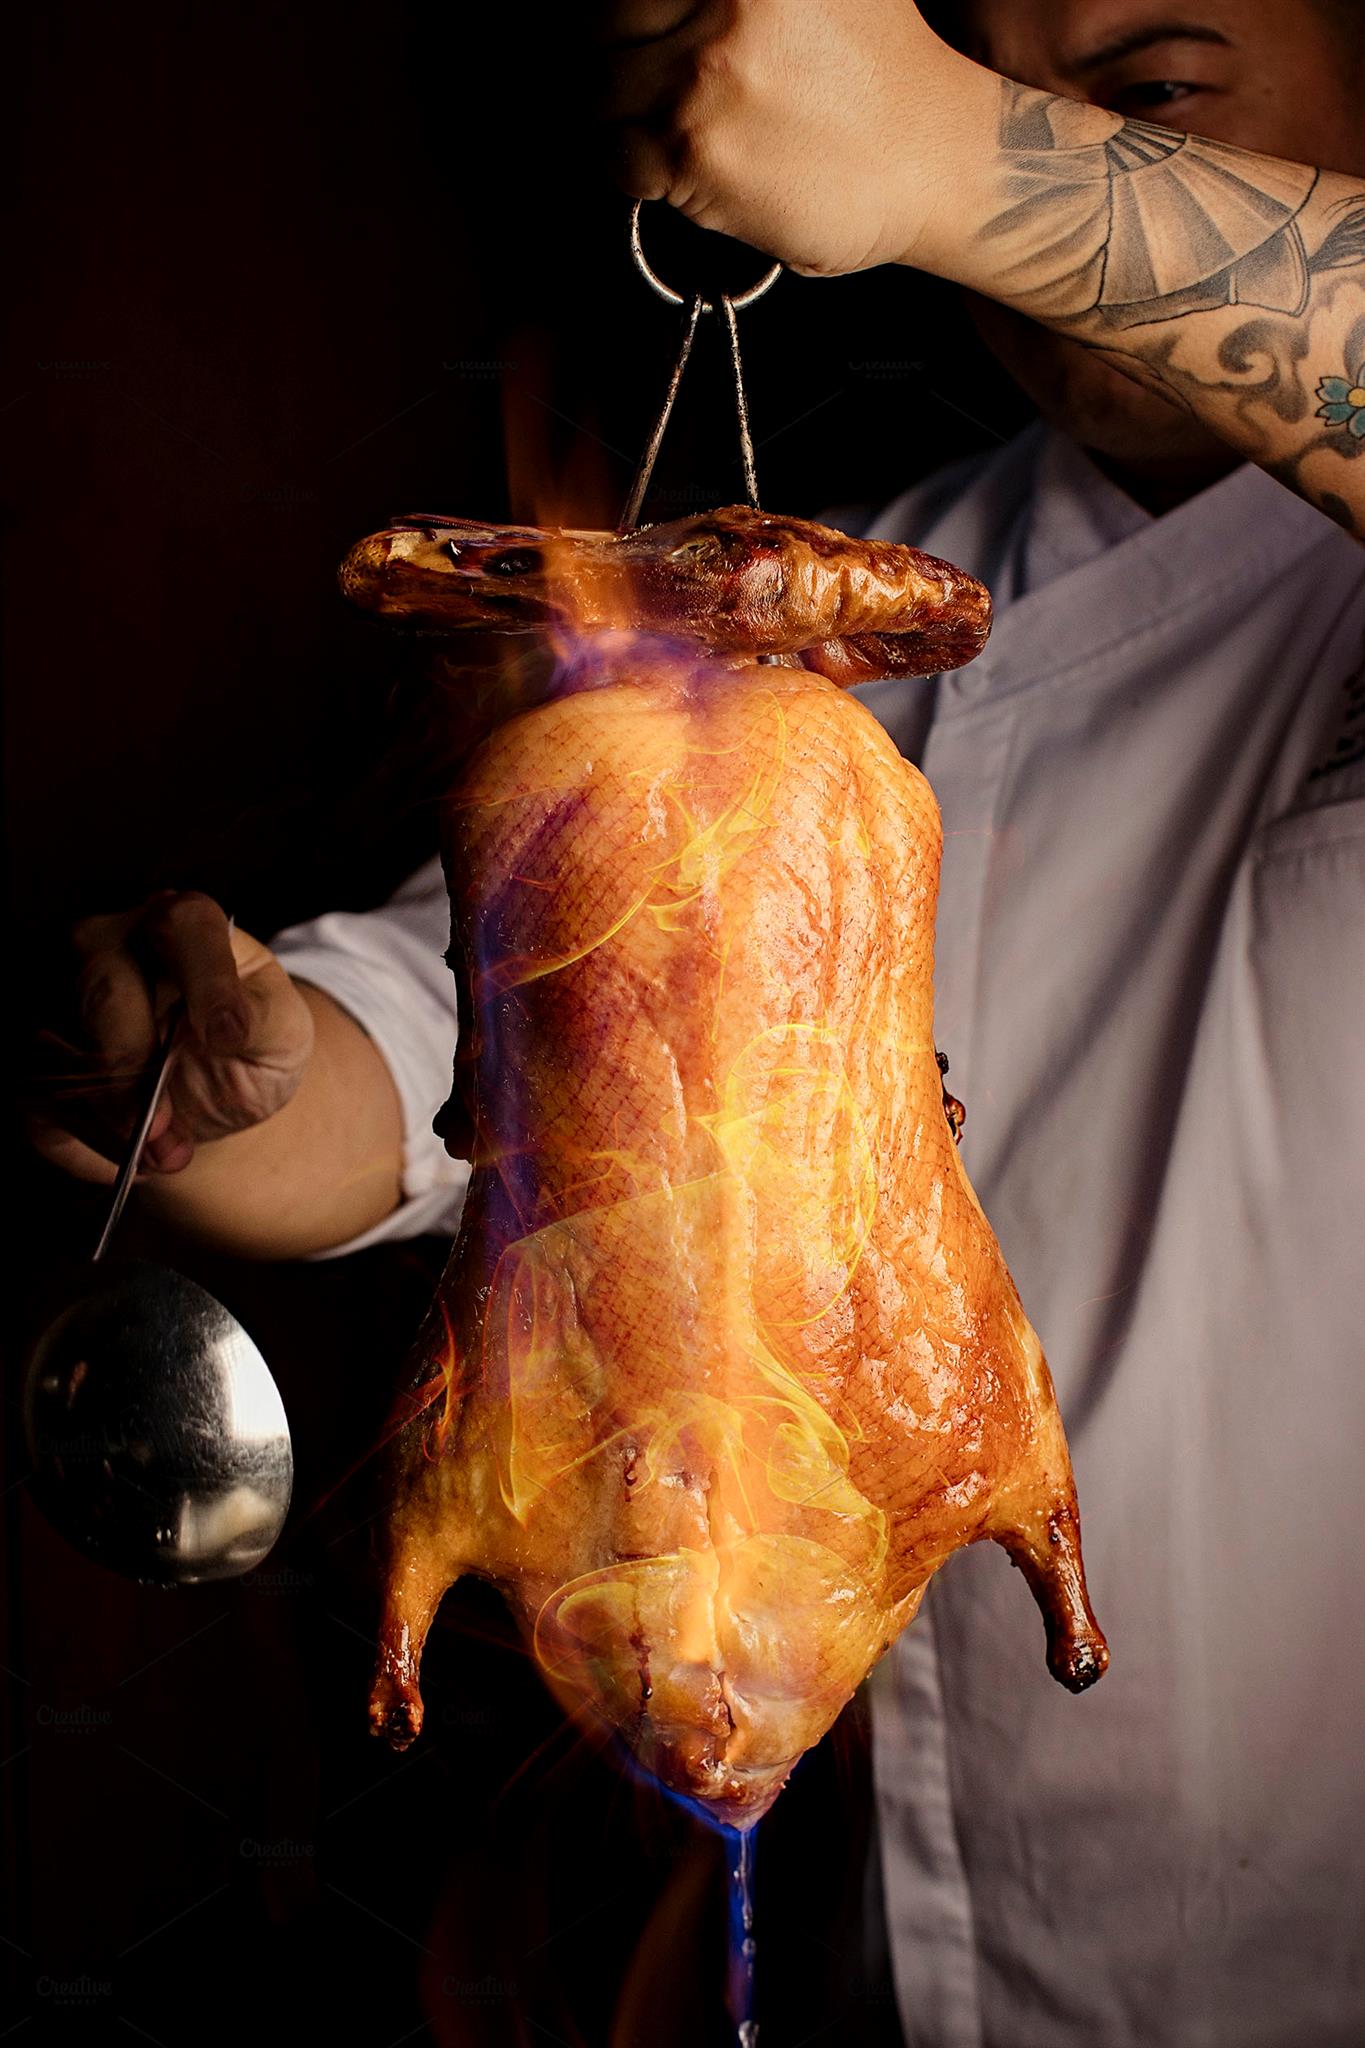 Roasted flambéed peking duck is a signature Cantonese cuisine staple